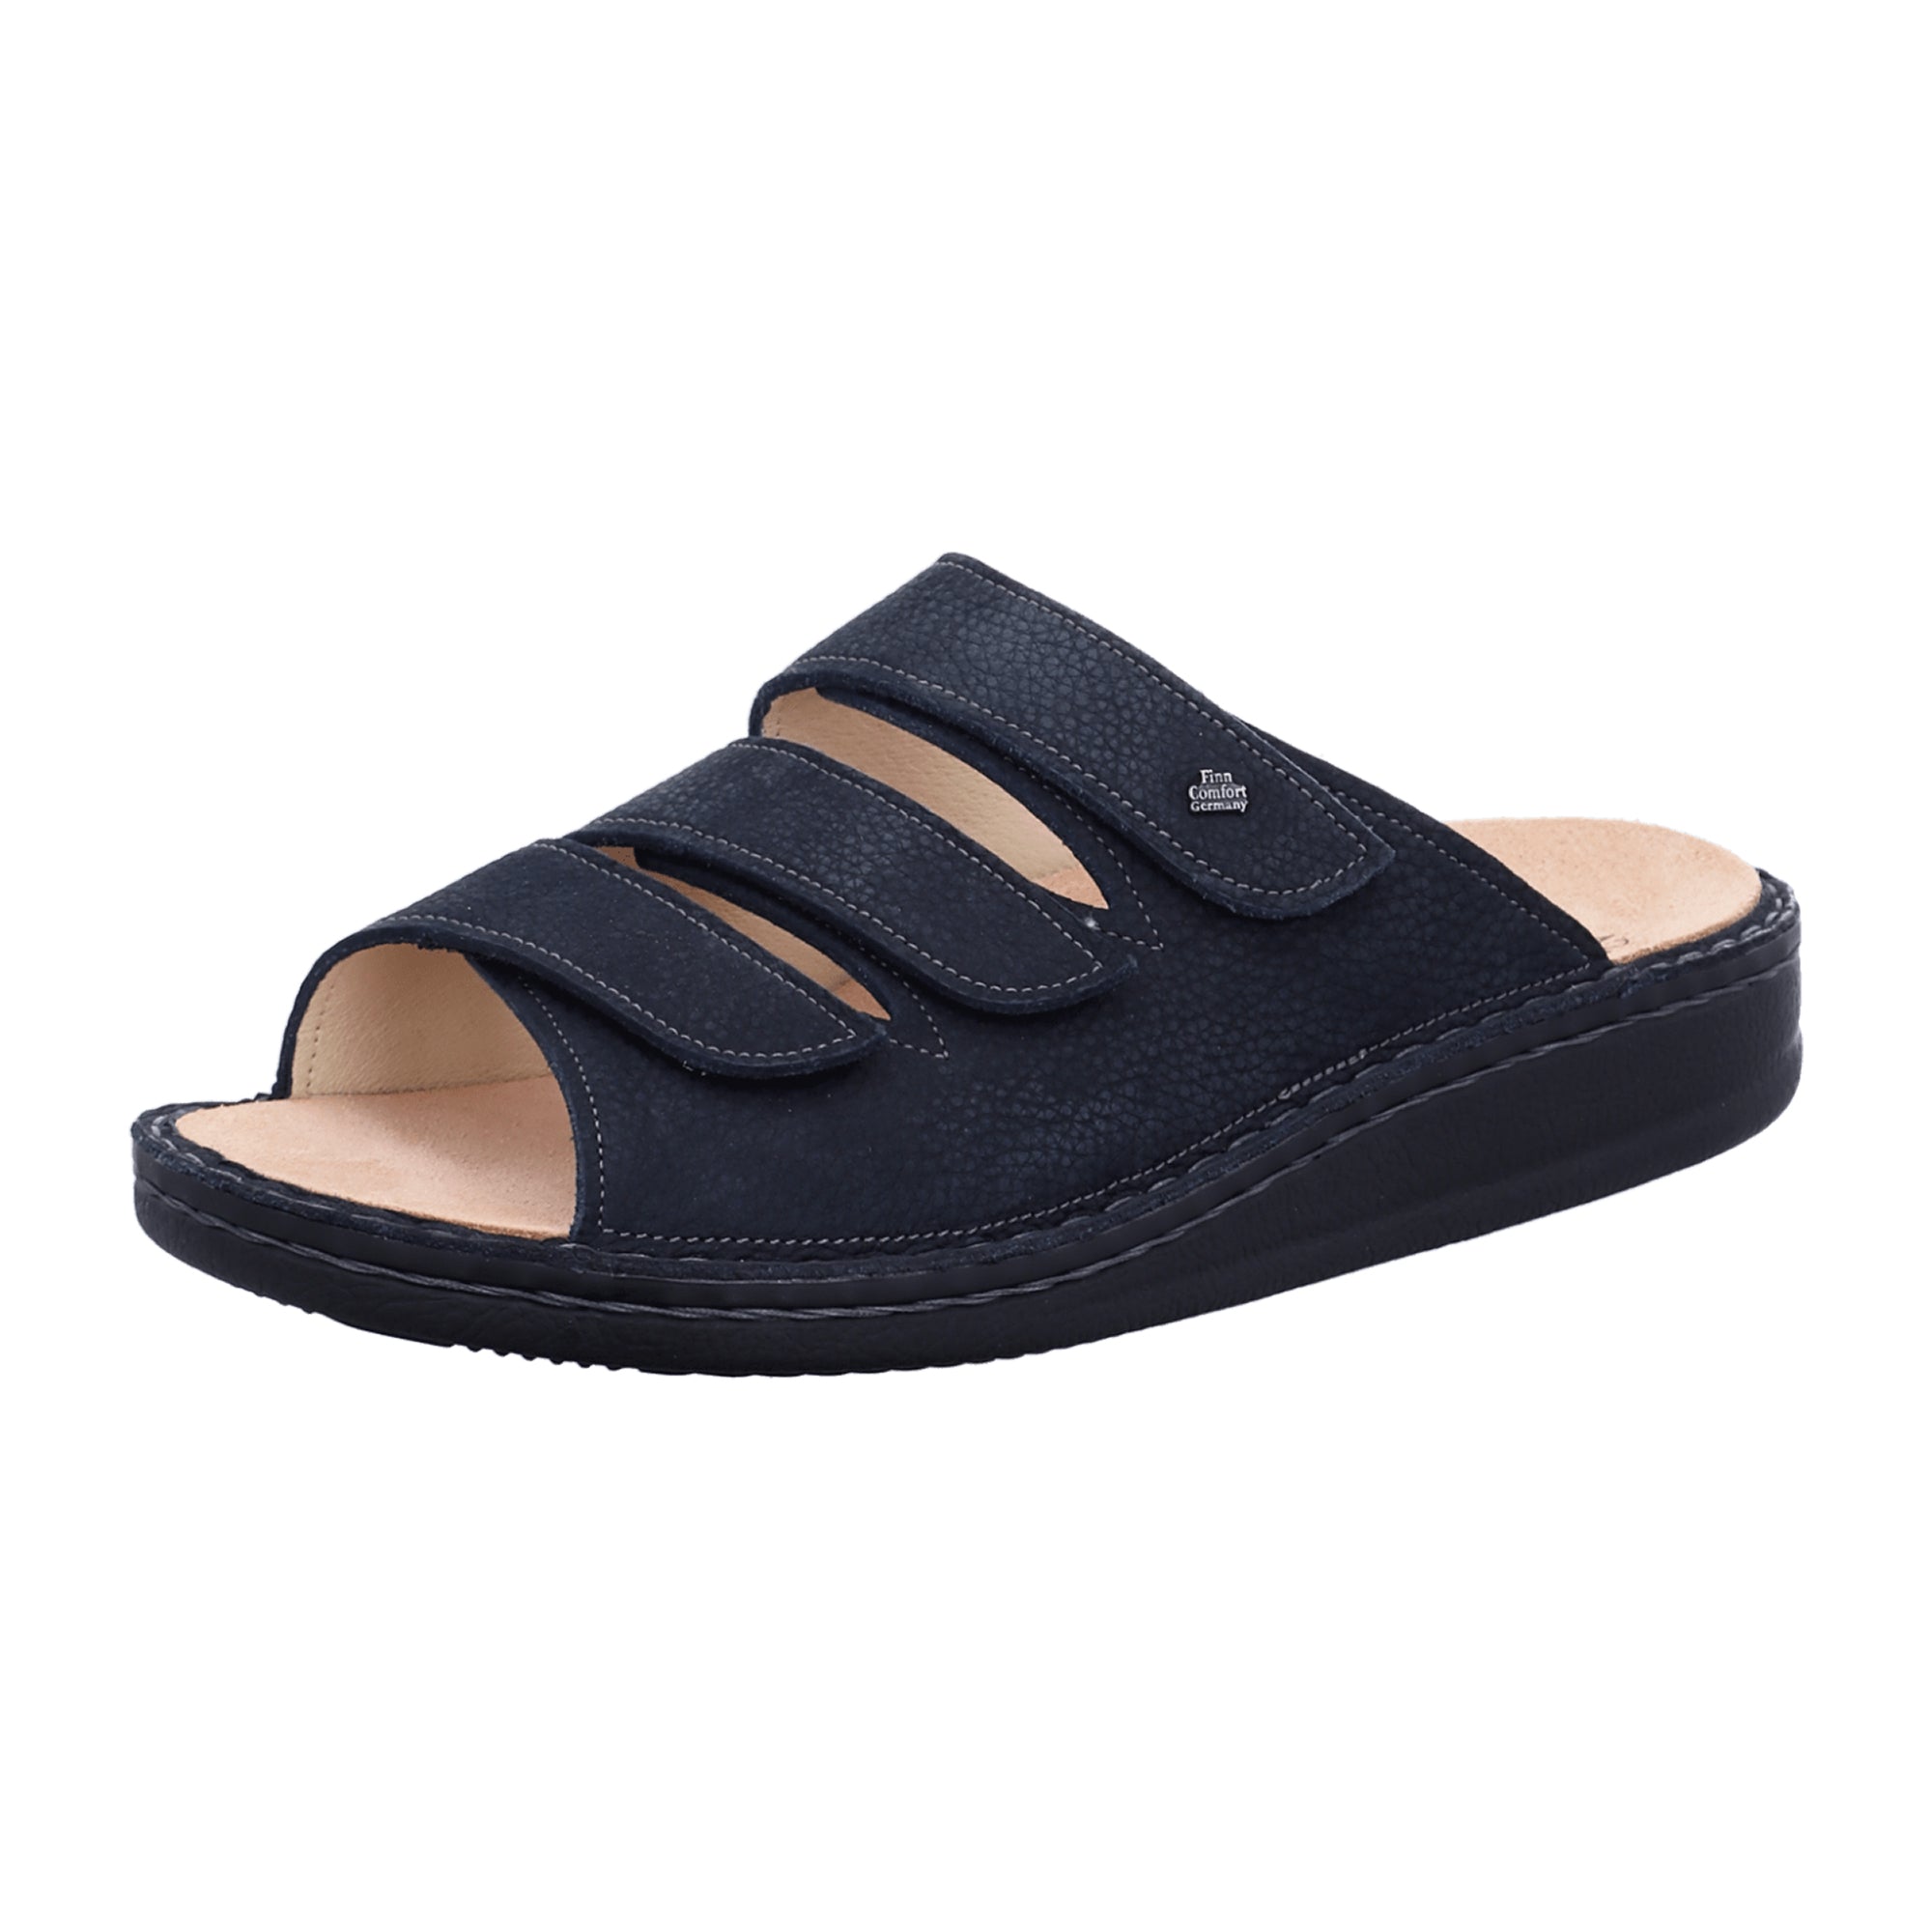 Finn Comfort Korfu Men's Slide Sandals, Night Blue - Stylish & Comfortable Leather Sandals for Men